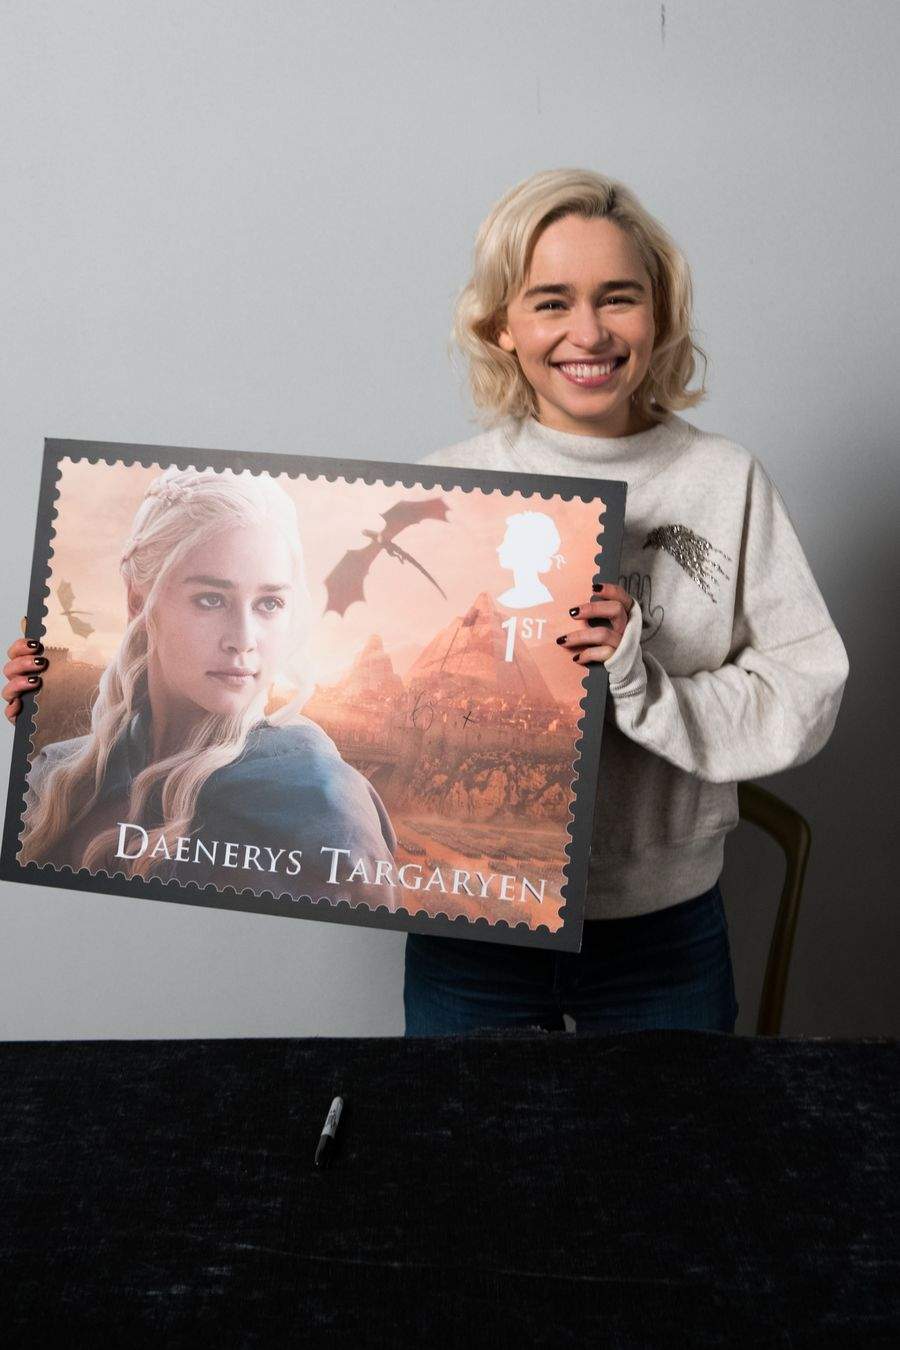 emilia clarke stamp - St Daenerys Targaryen